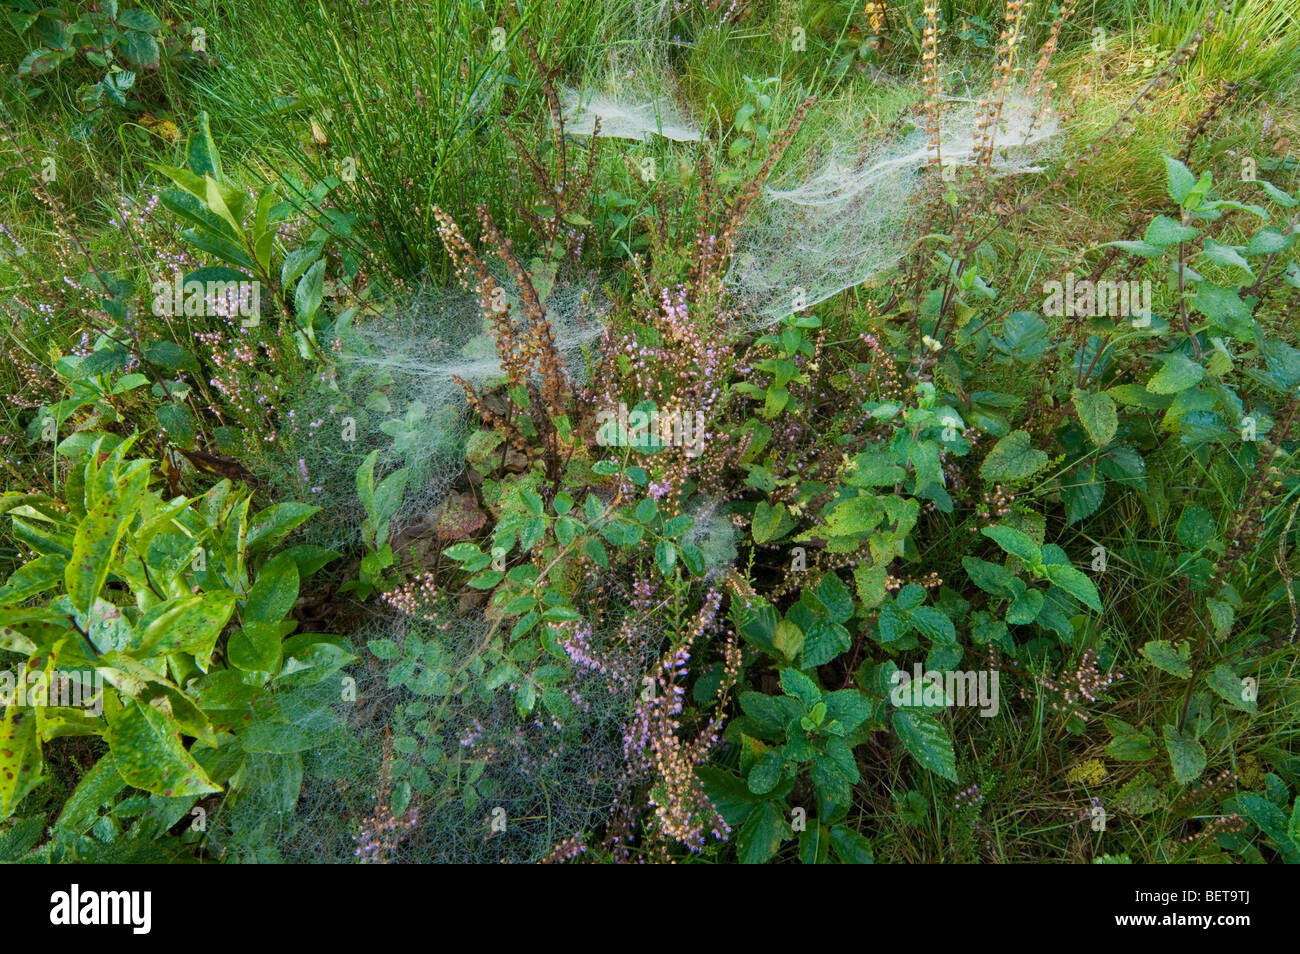 Spider webs covered in dew, Belgium, Europe Stock Photo